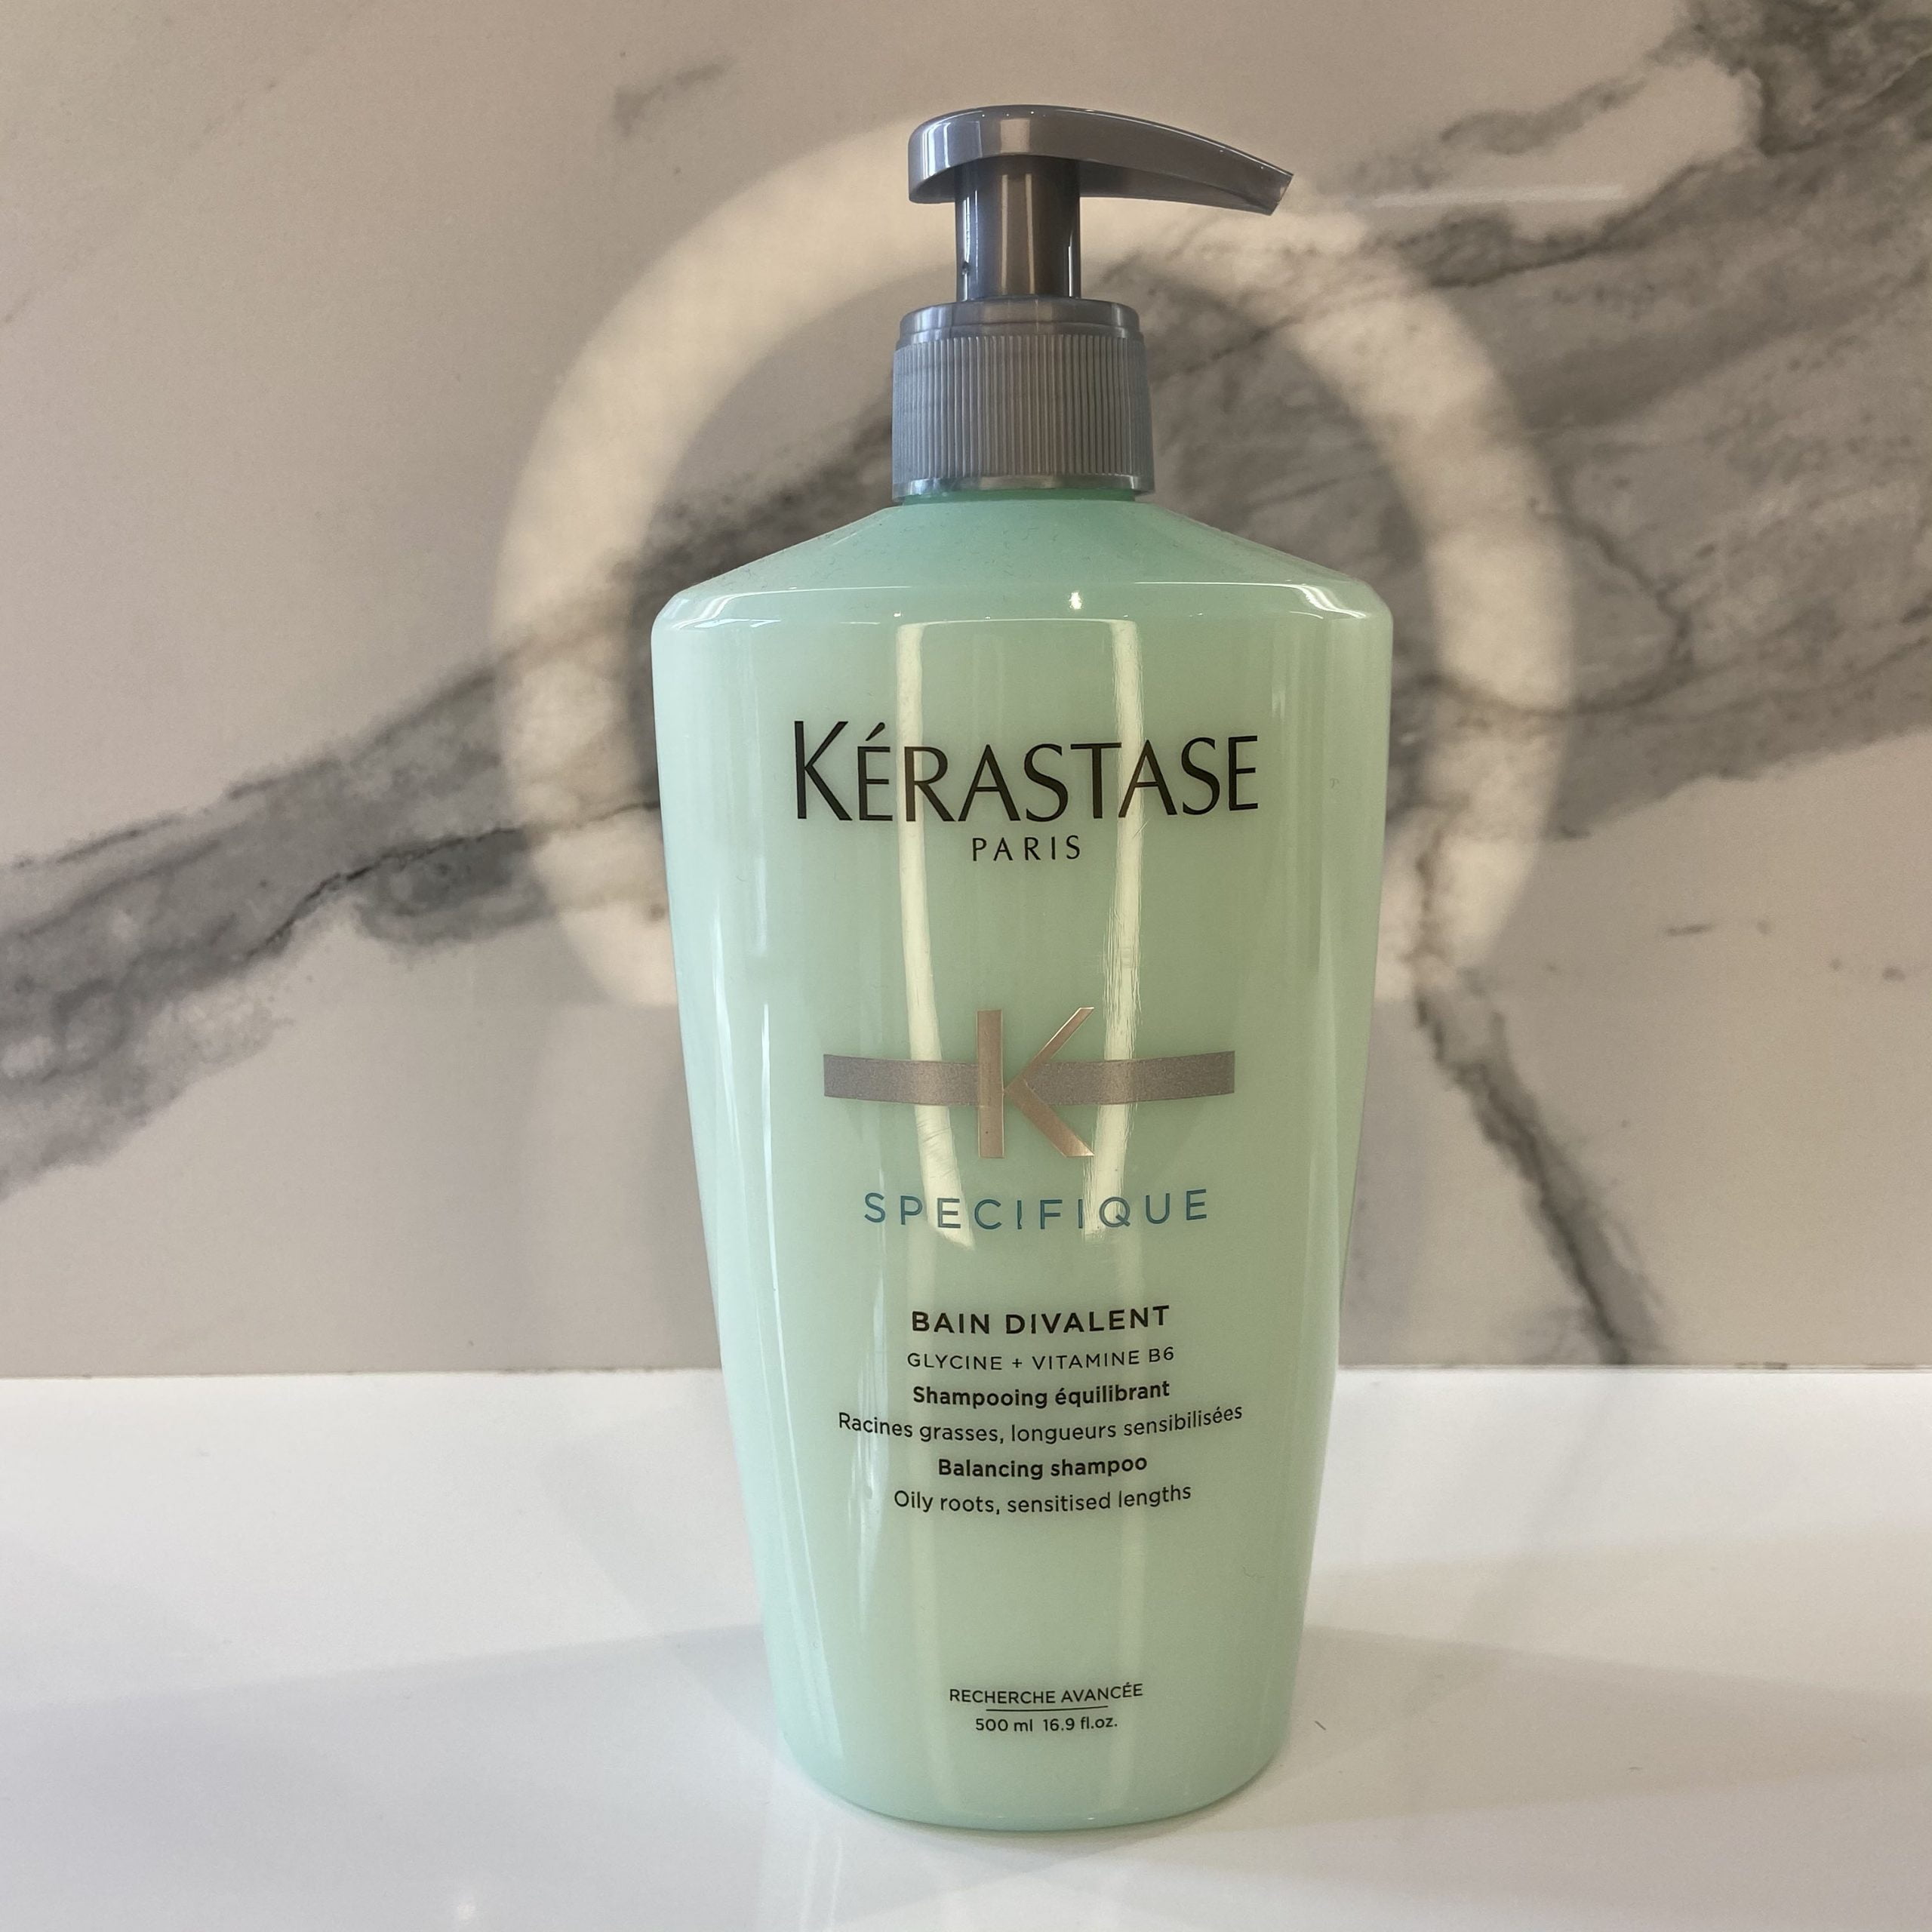 Kerastase Specifique Divalent Balancing Shampoo, 16.9oz. - Walmart.com